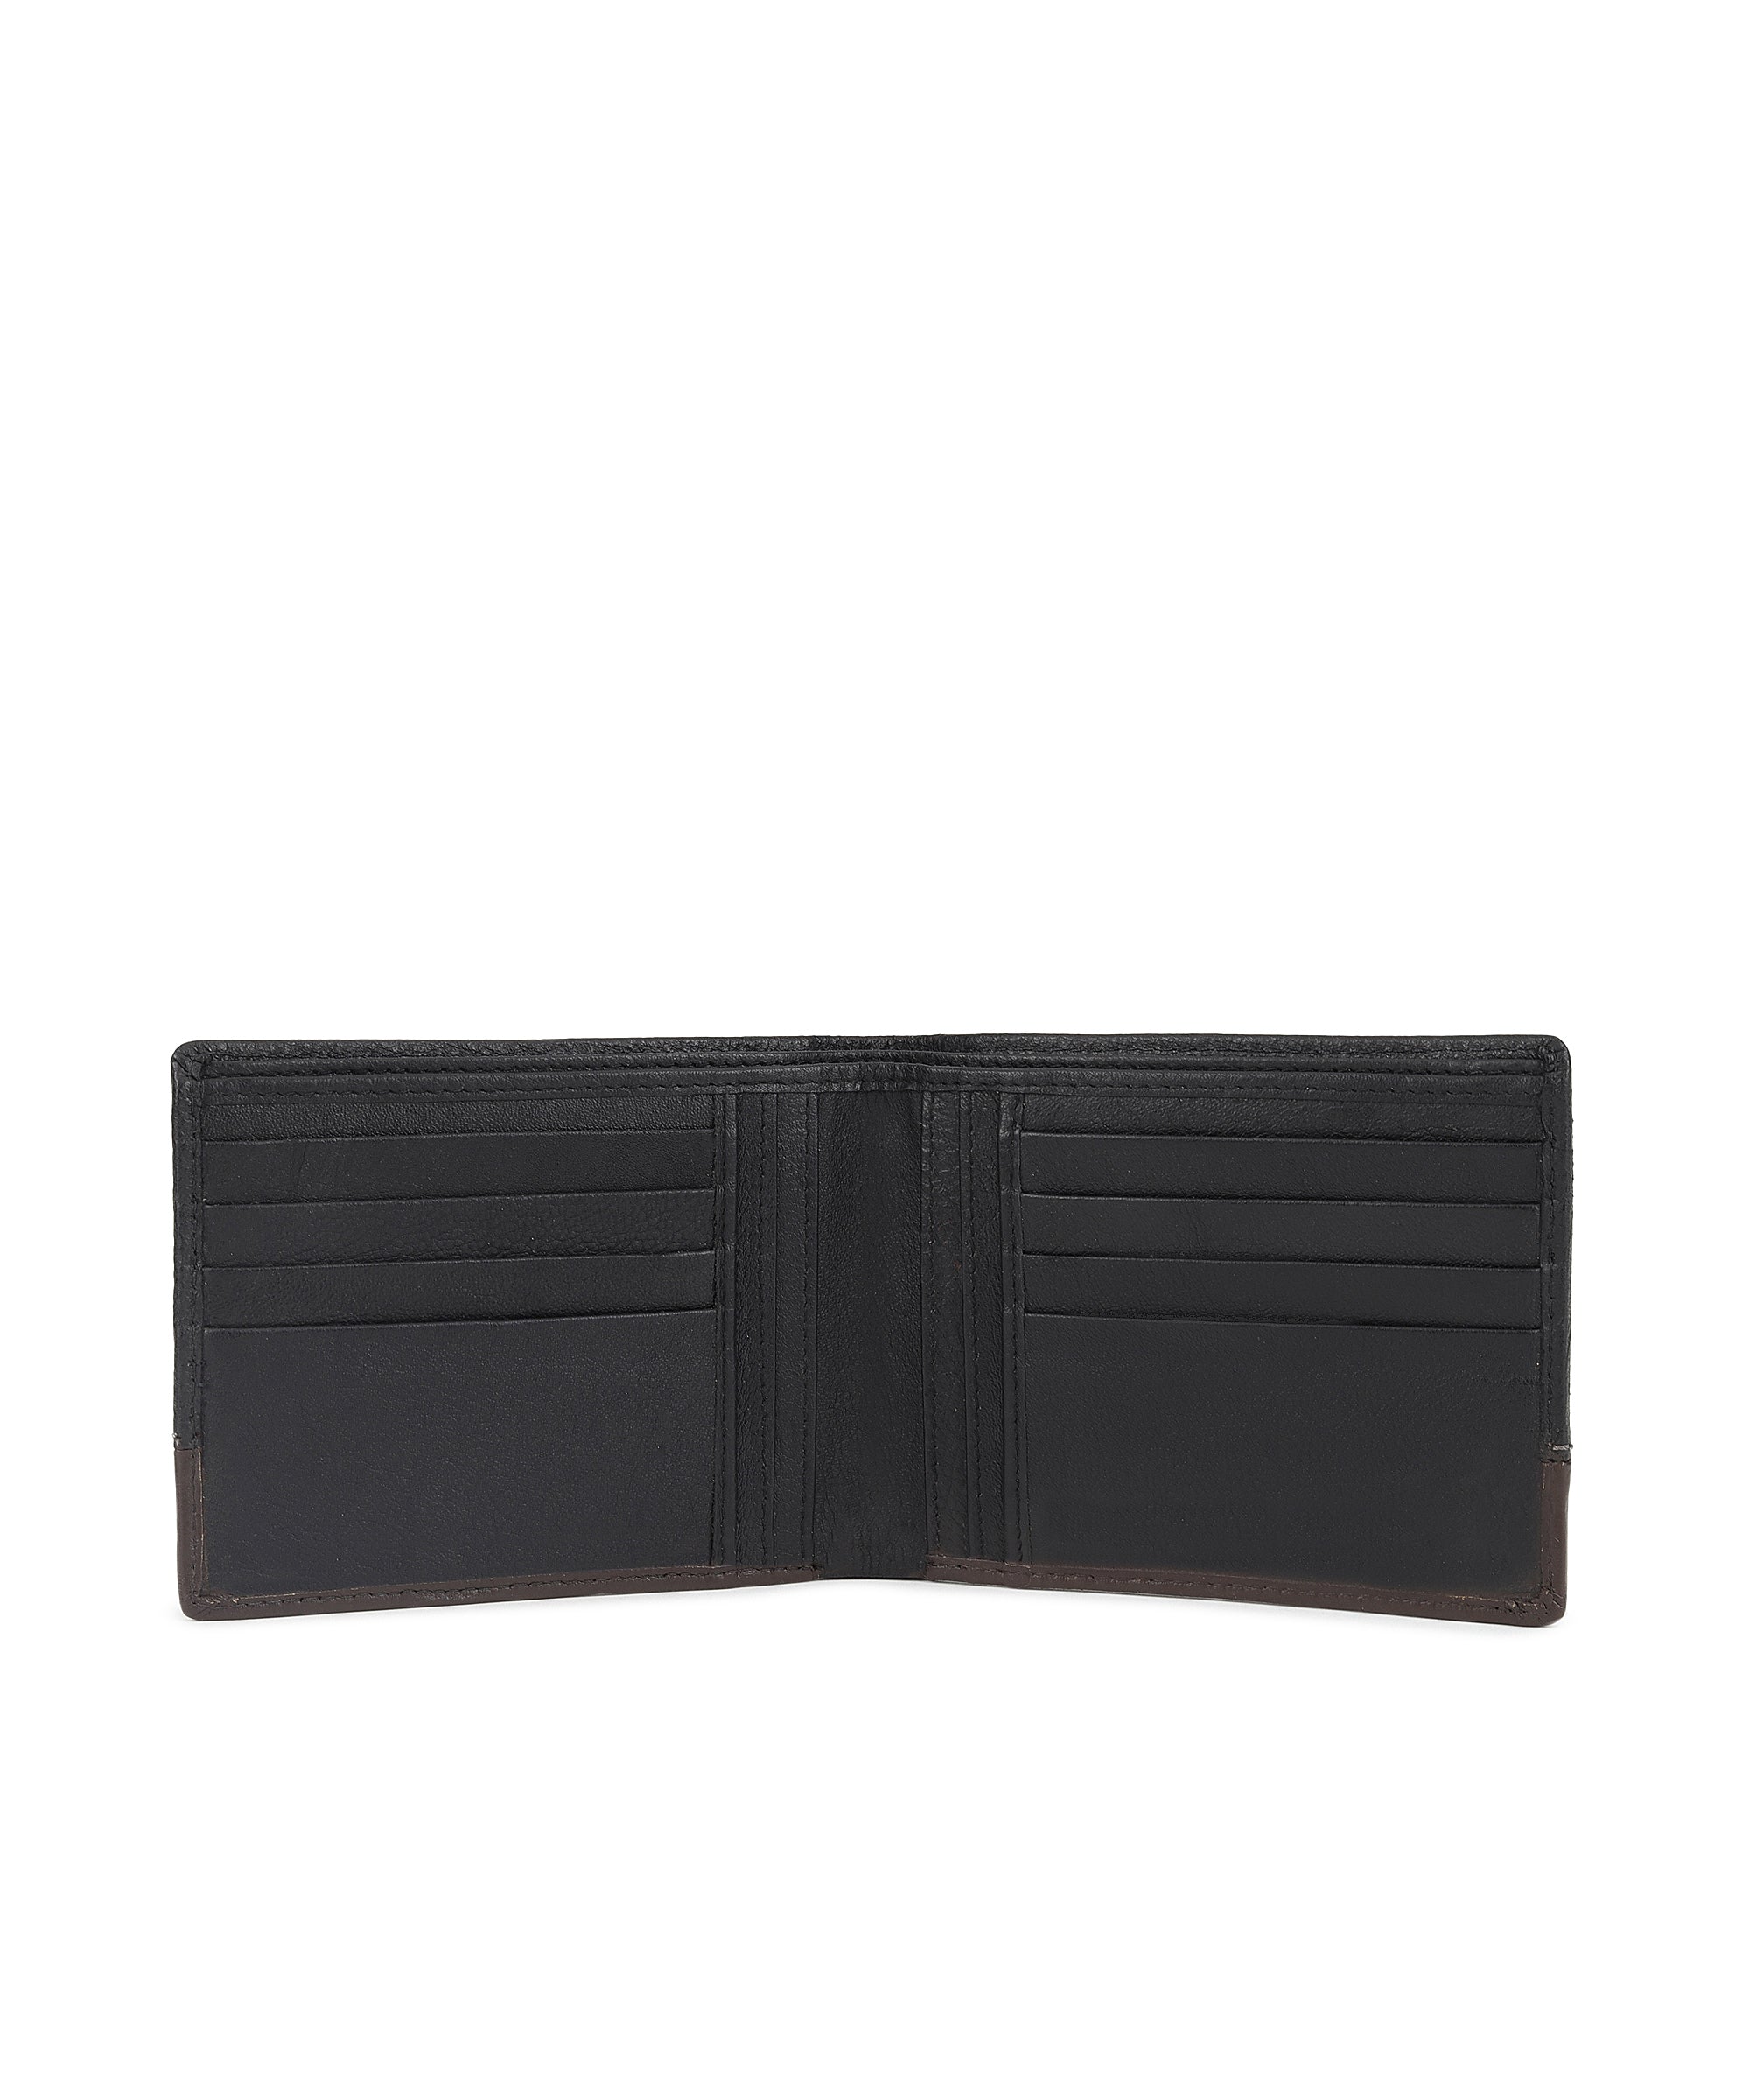 Urbano Fashion Men's Casual, Formal Black Genuine Leather Wallet -12 Card Slots